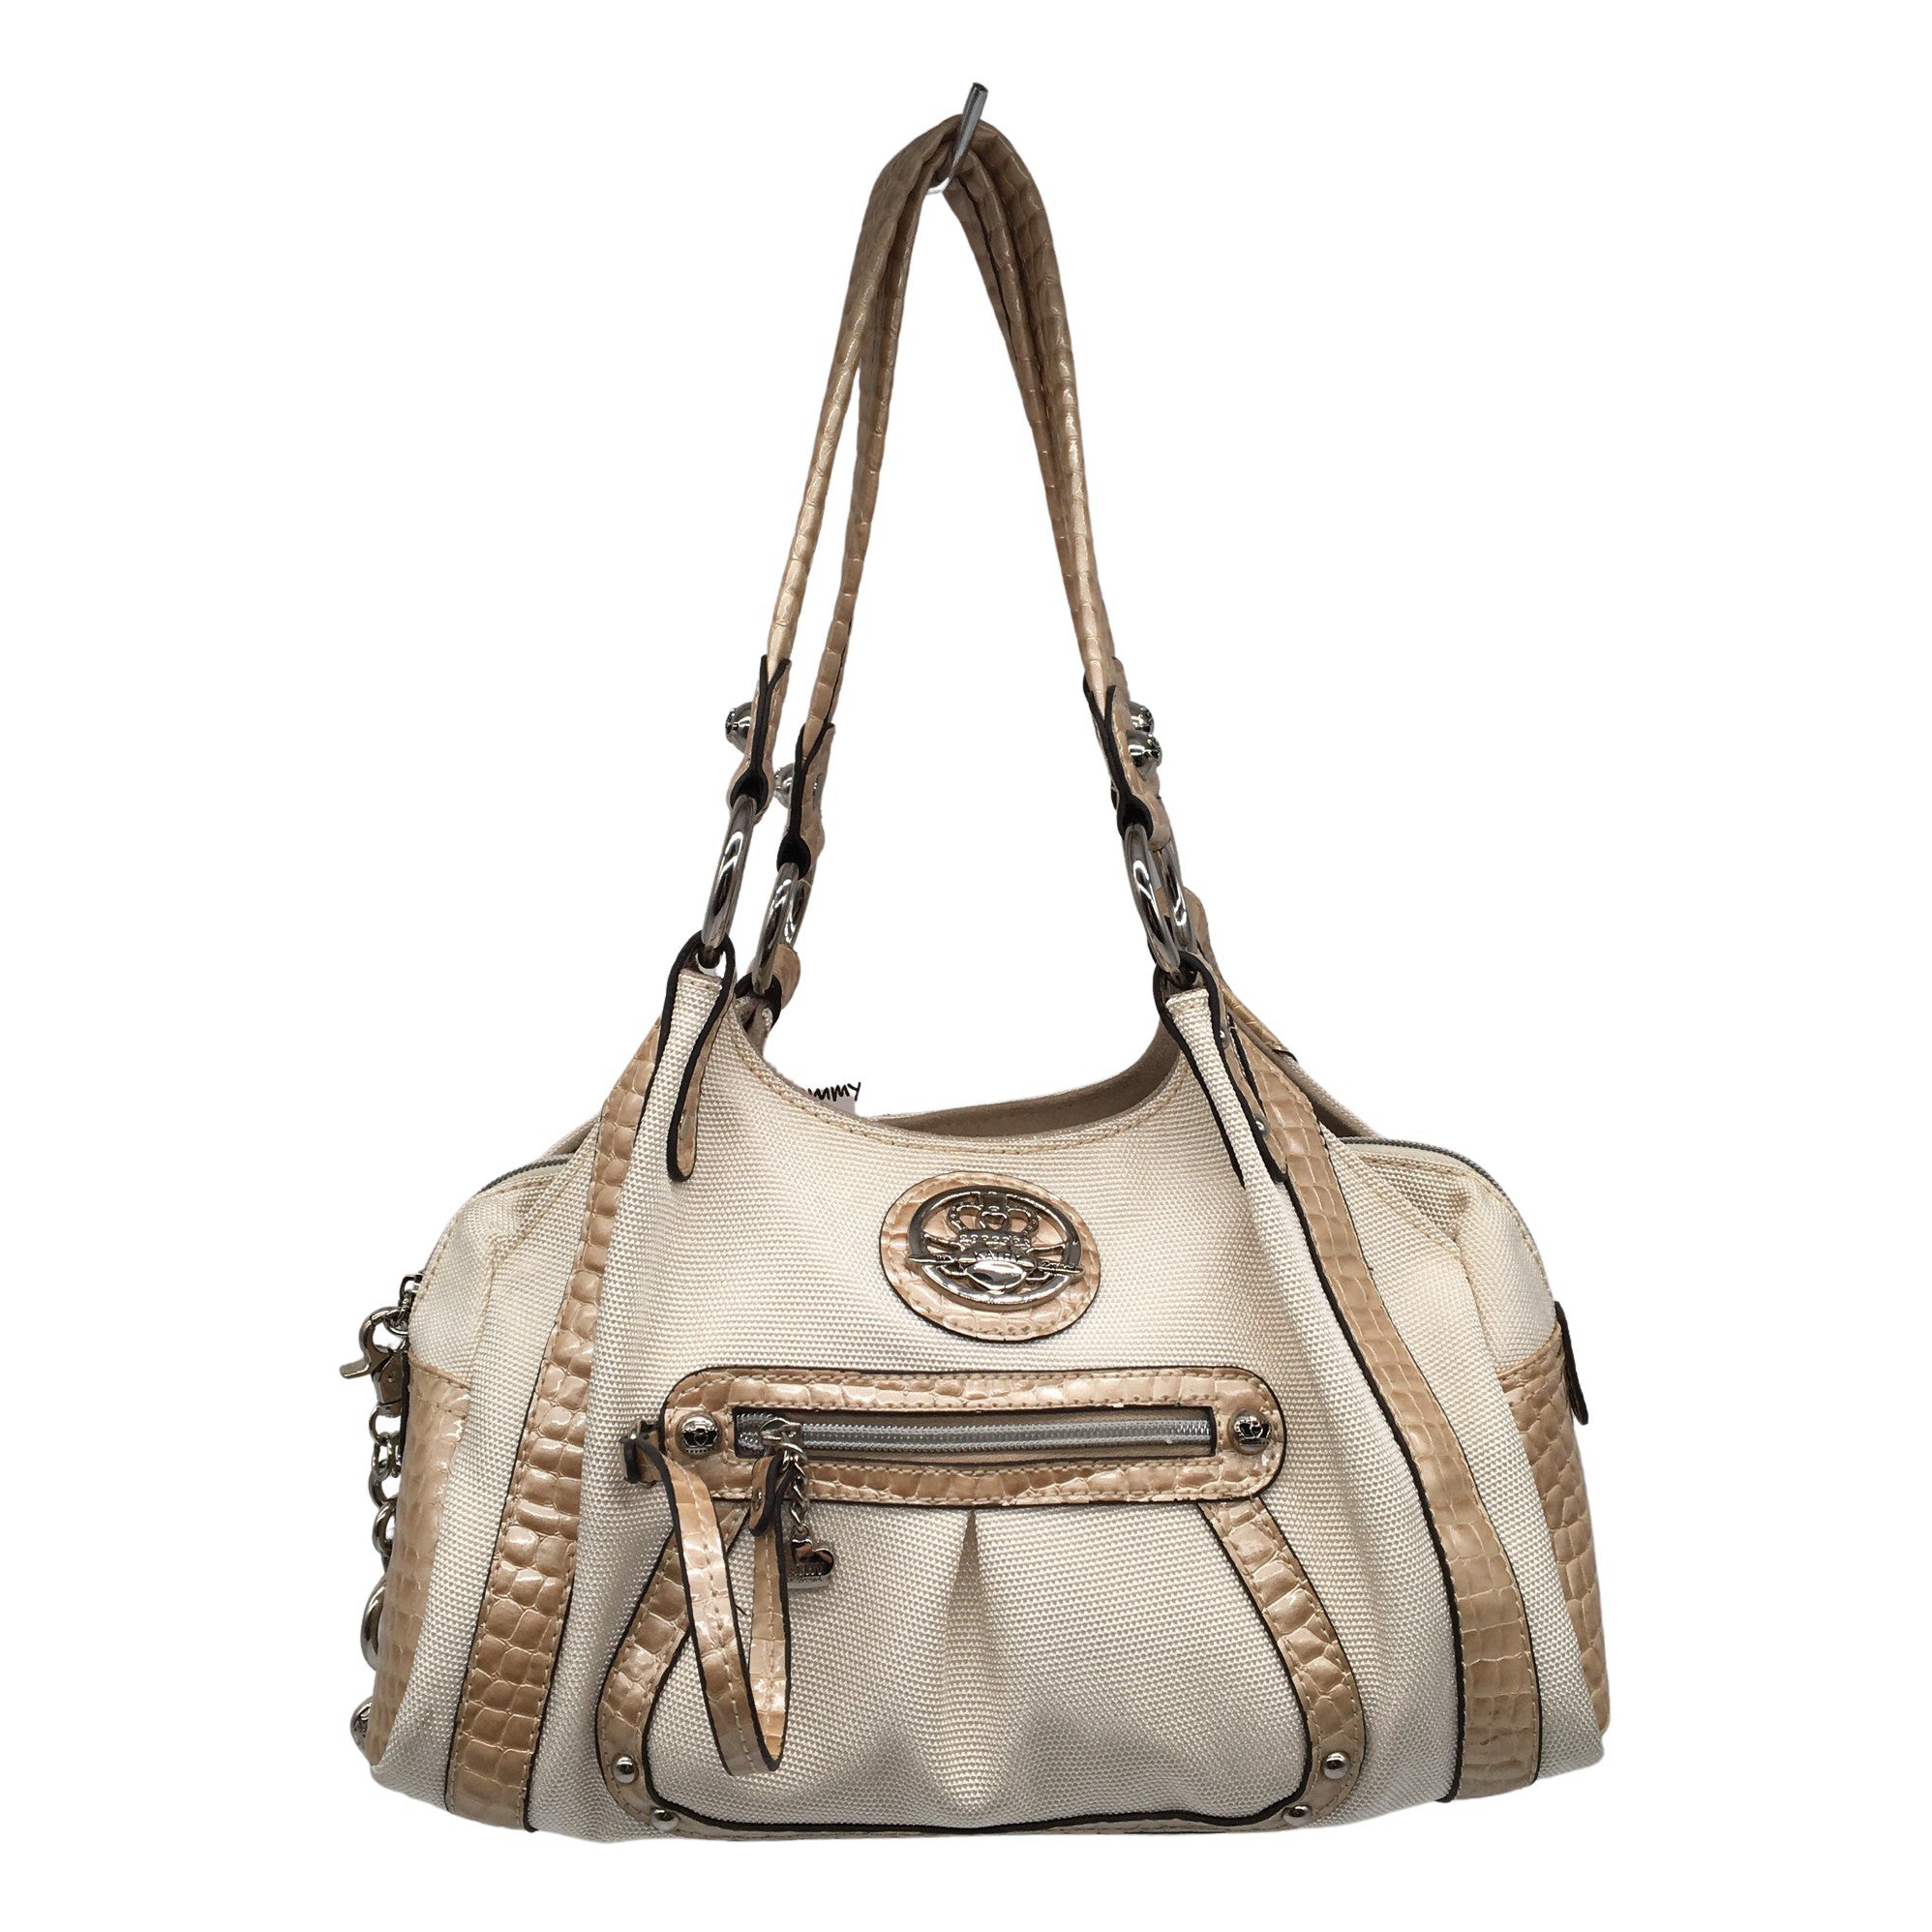 Kathy Van Zeeland Belted Shopper Handbag Purse White/Cream w Jeweled  Adornment | eBay